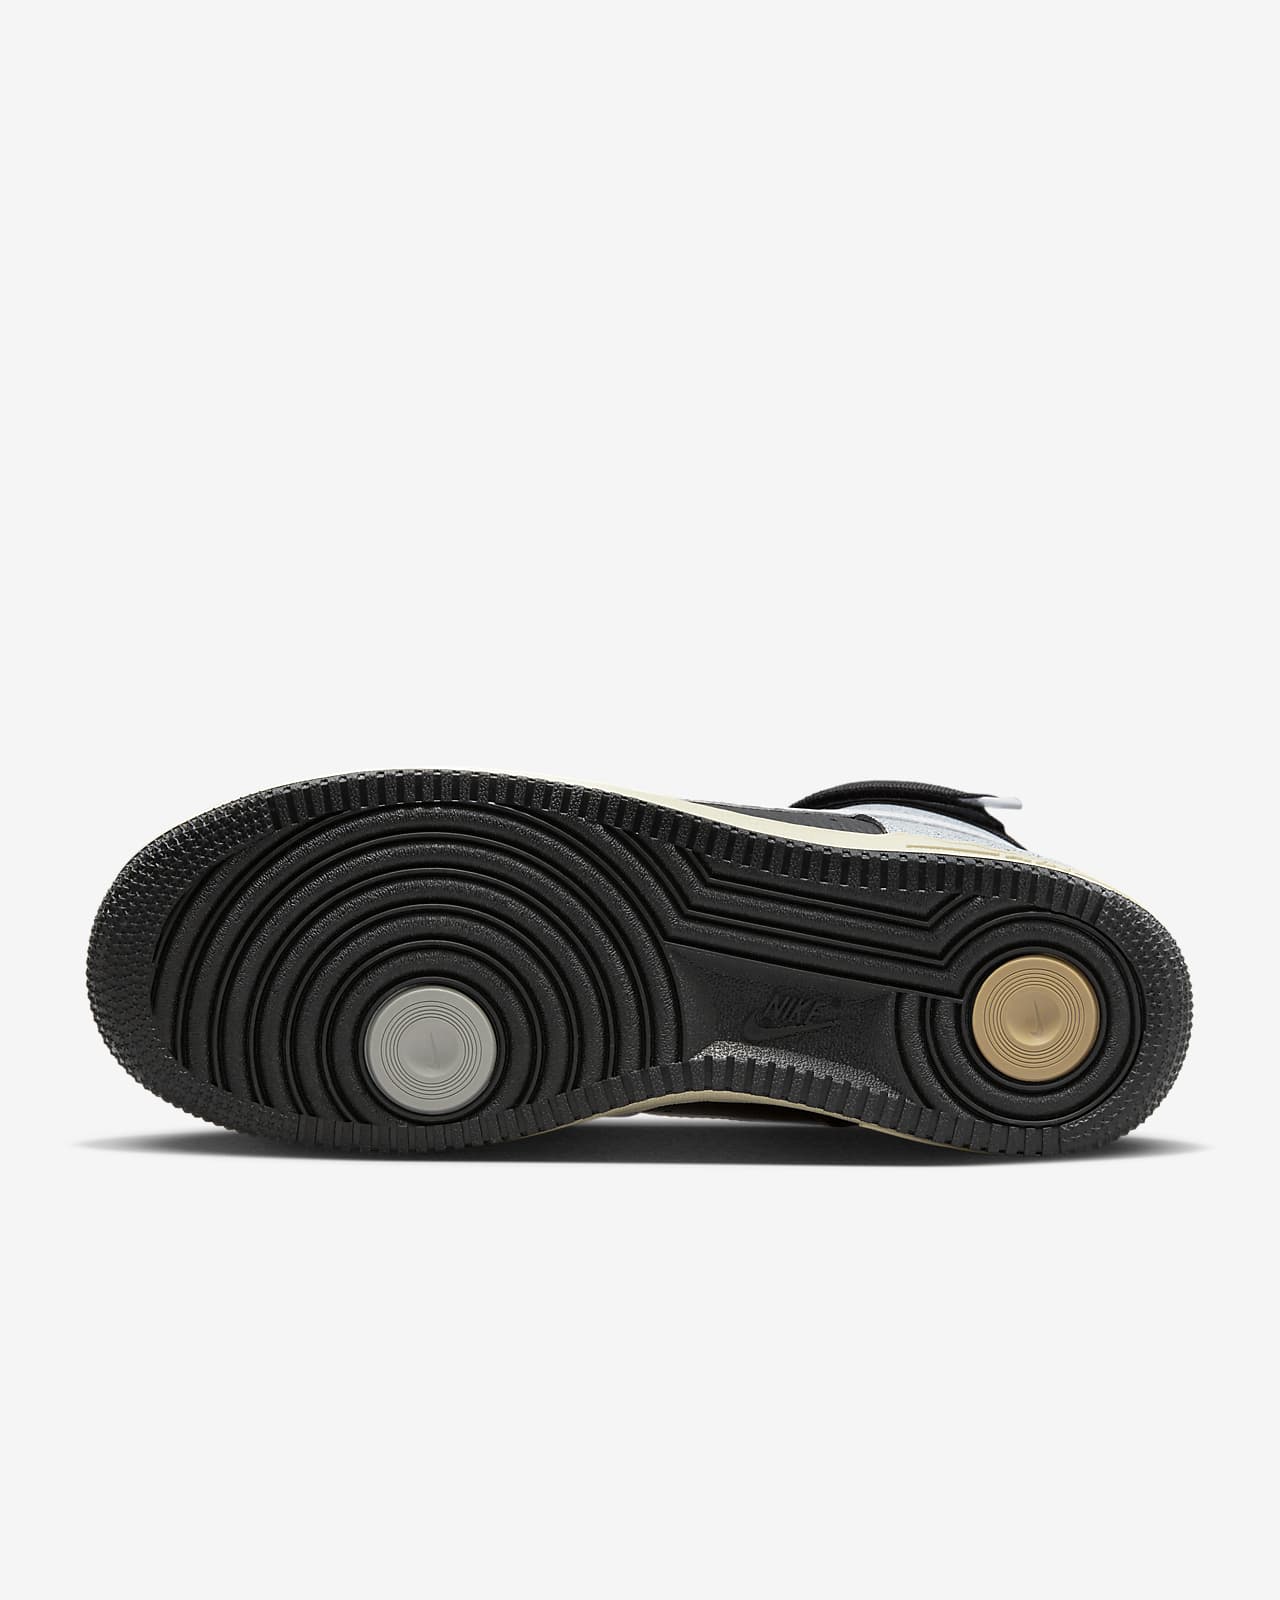 Nike Air Force 1 High 07 Shoes (white/black)